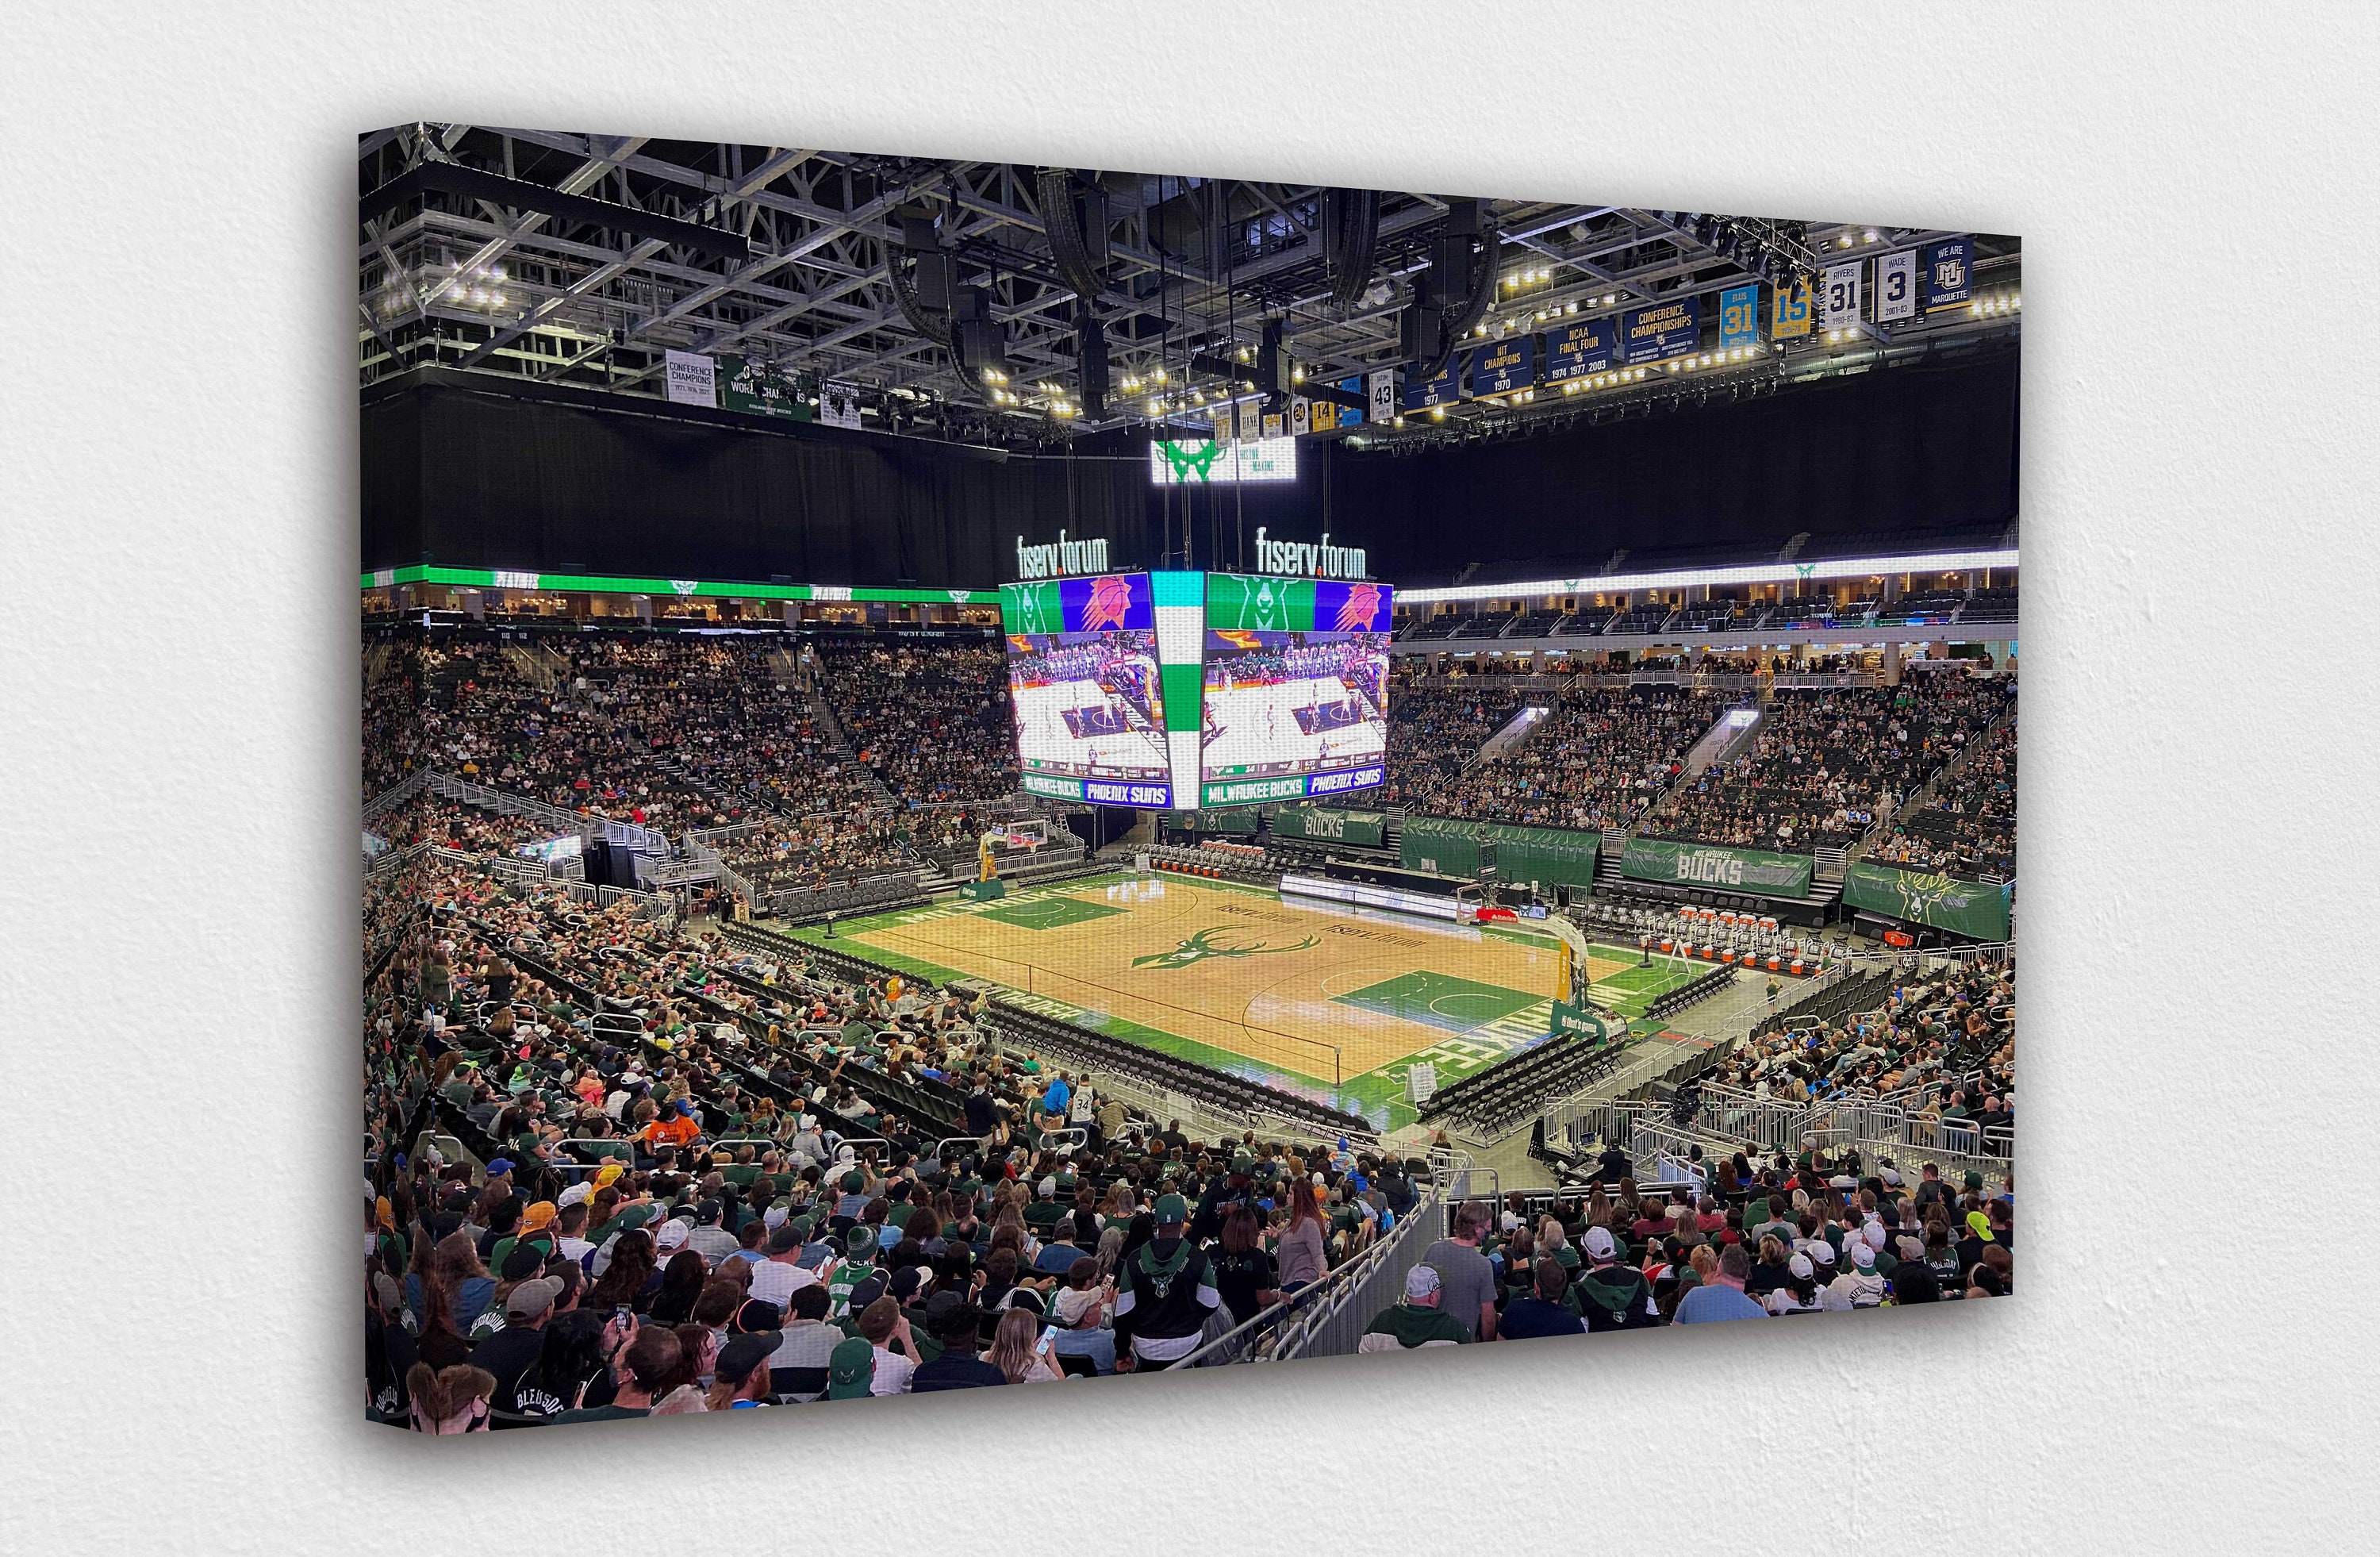 Bucks New Arena Is the Chic, $524 Million Fiserv Forum: PHOTOS